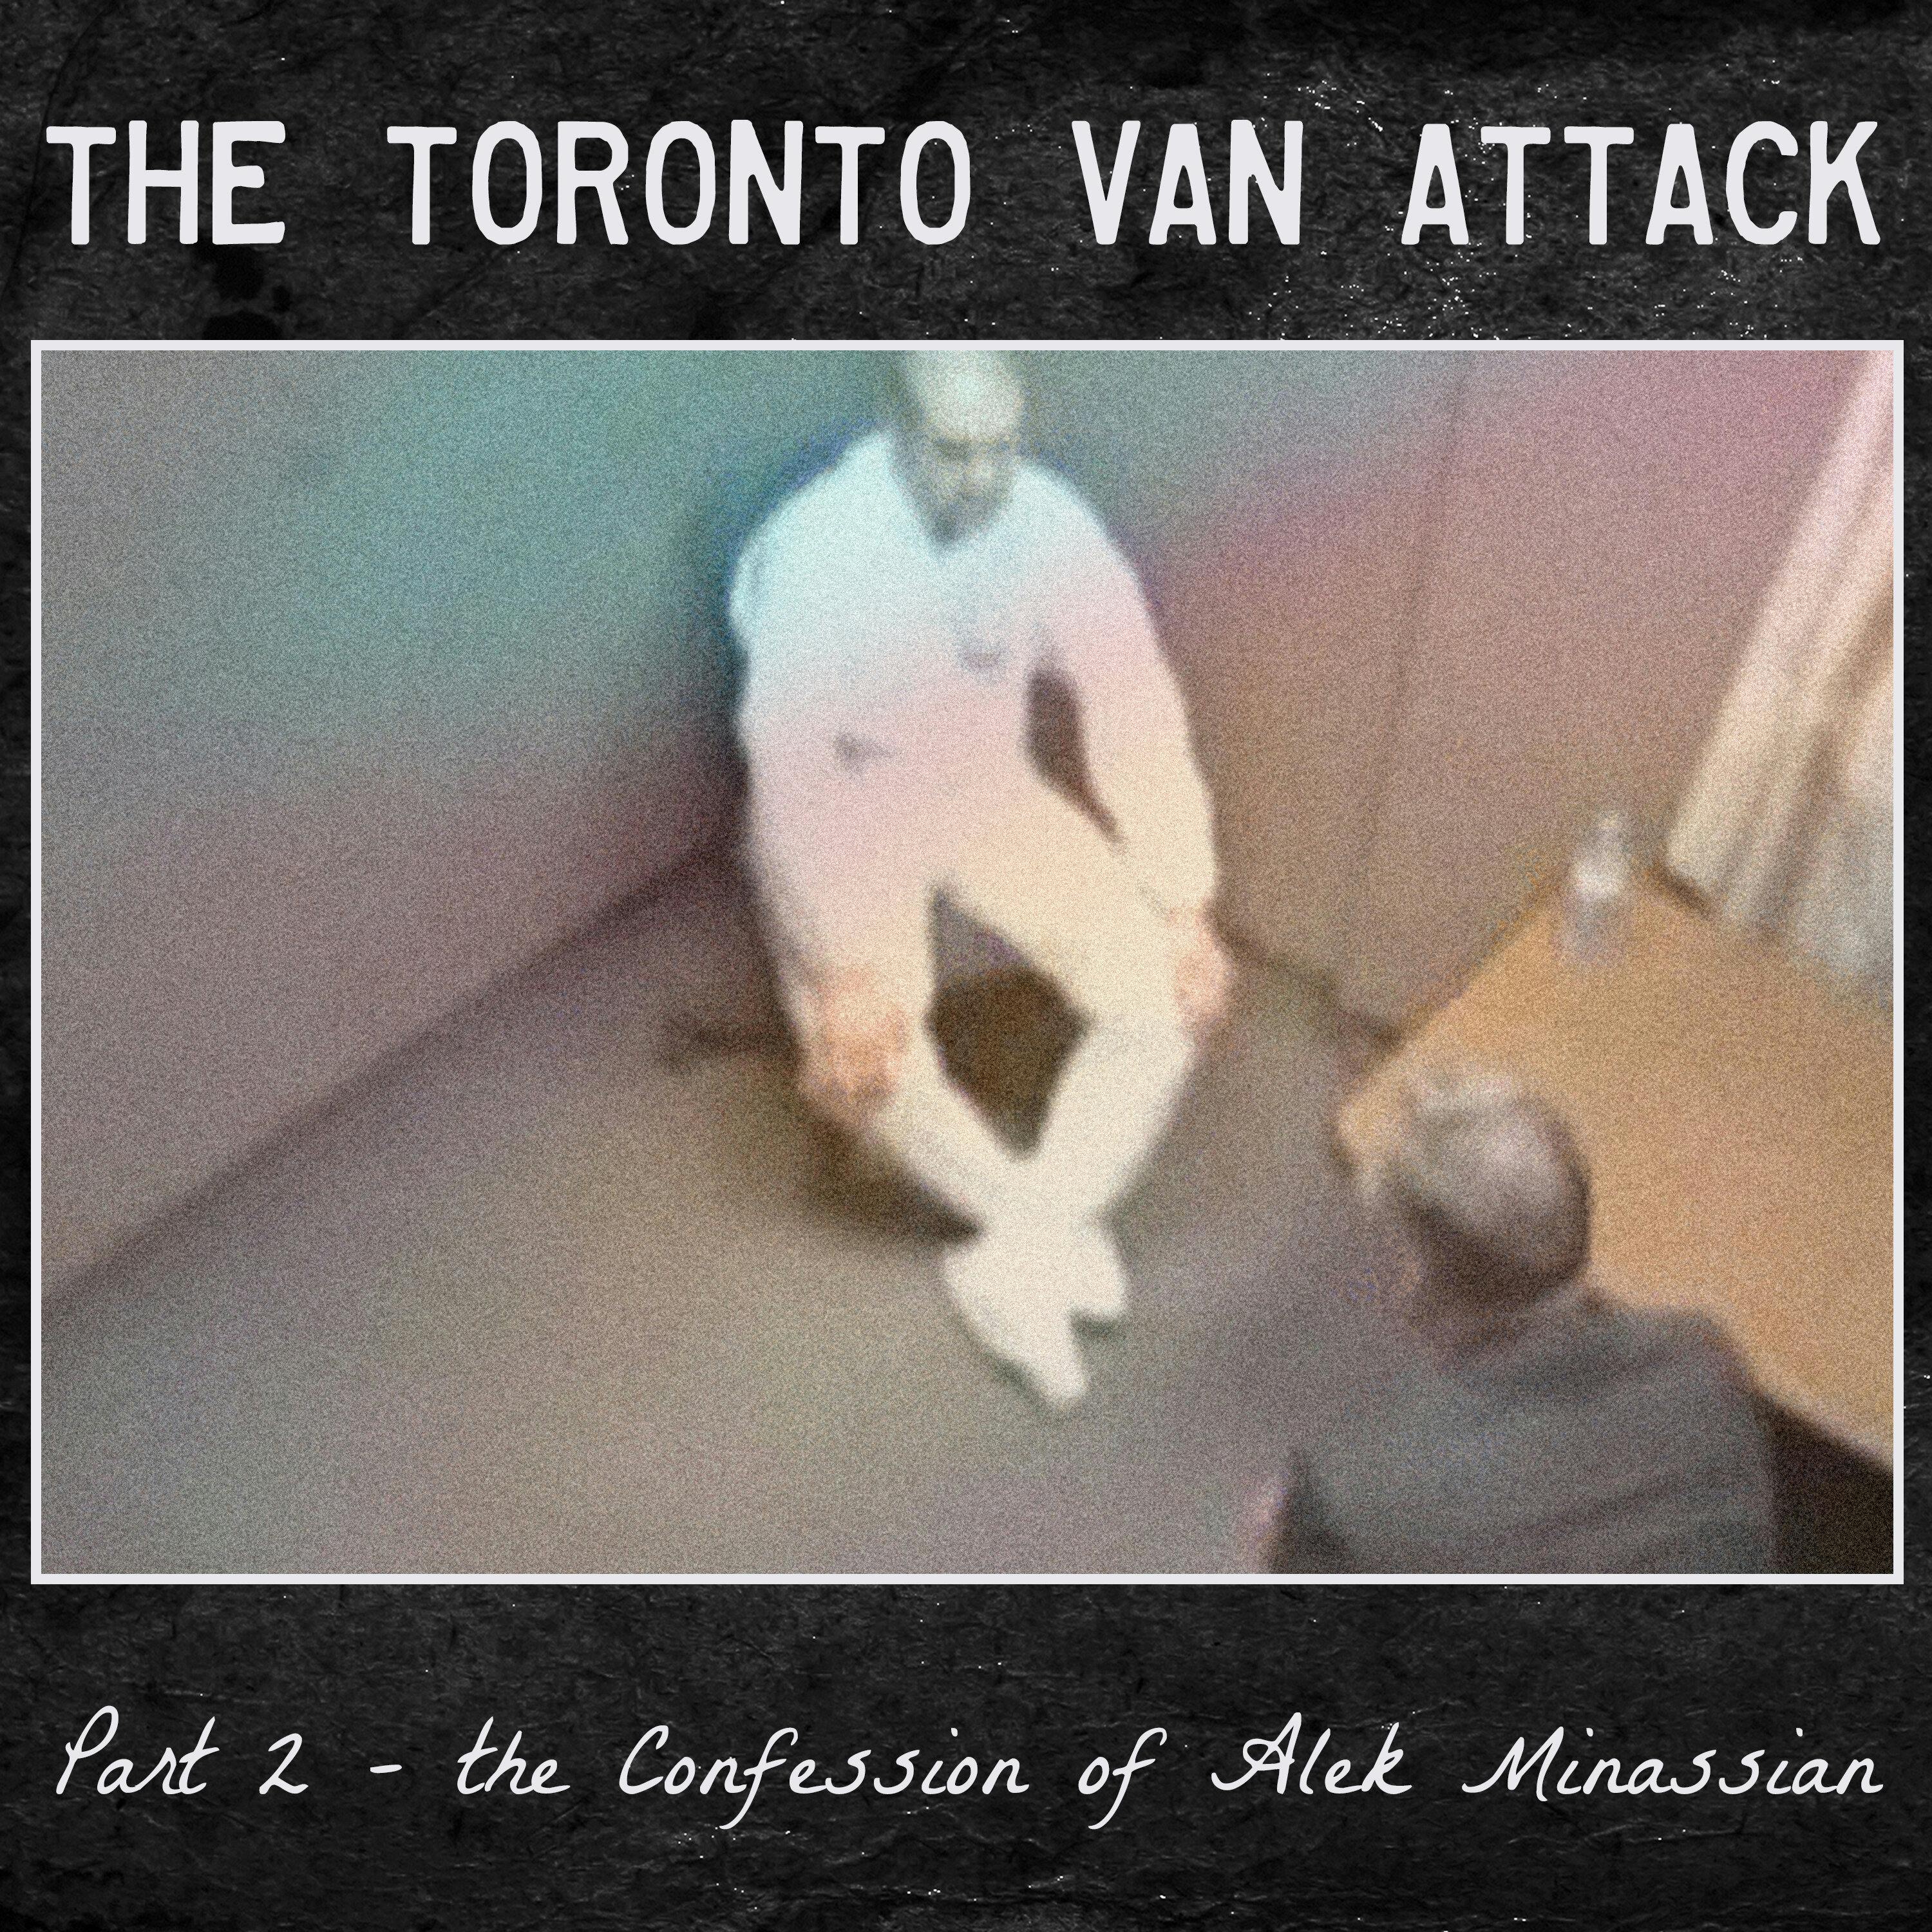 The Toronto Van Attack - 2 - the Confession of Alek Minassian